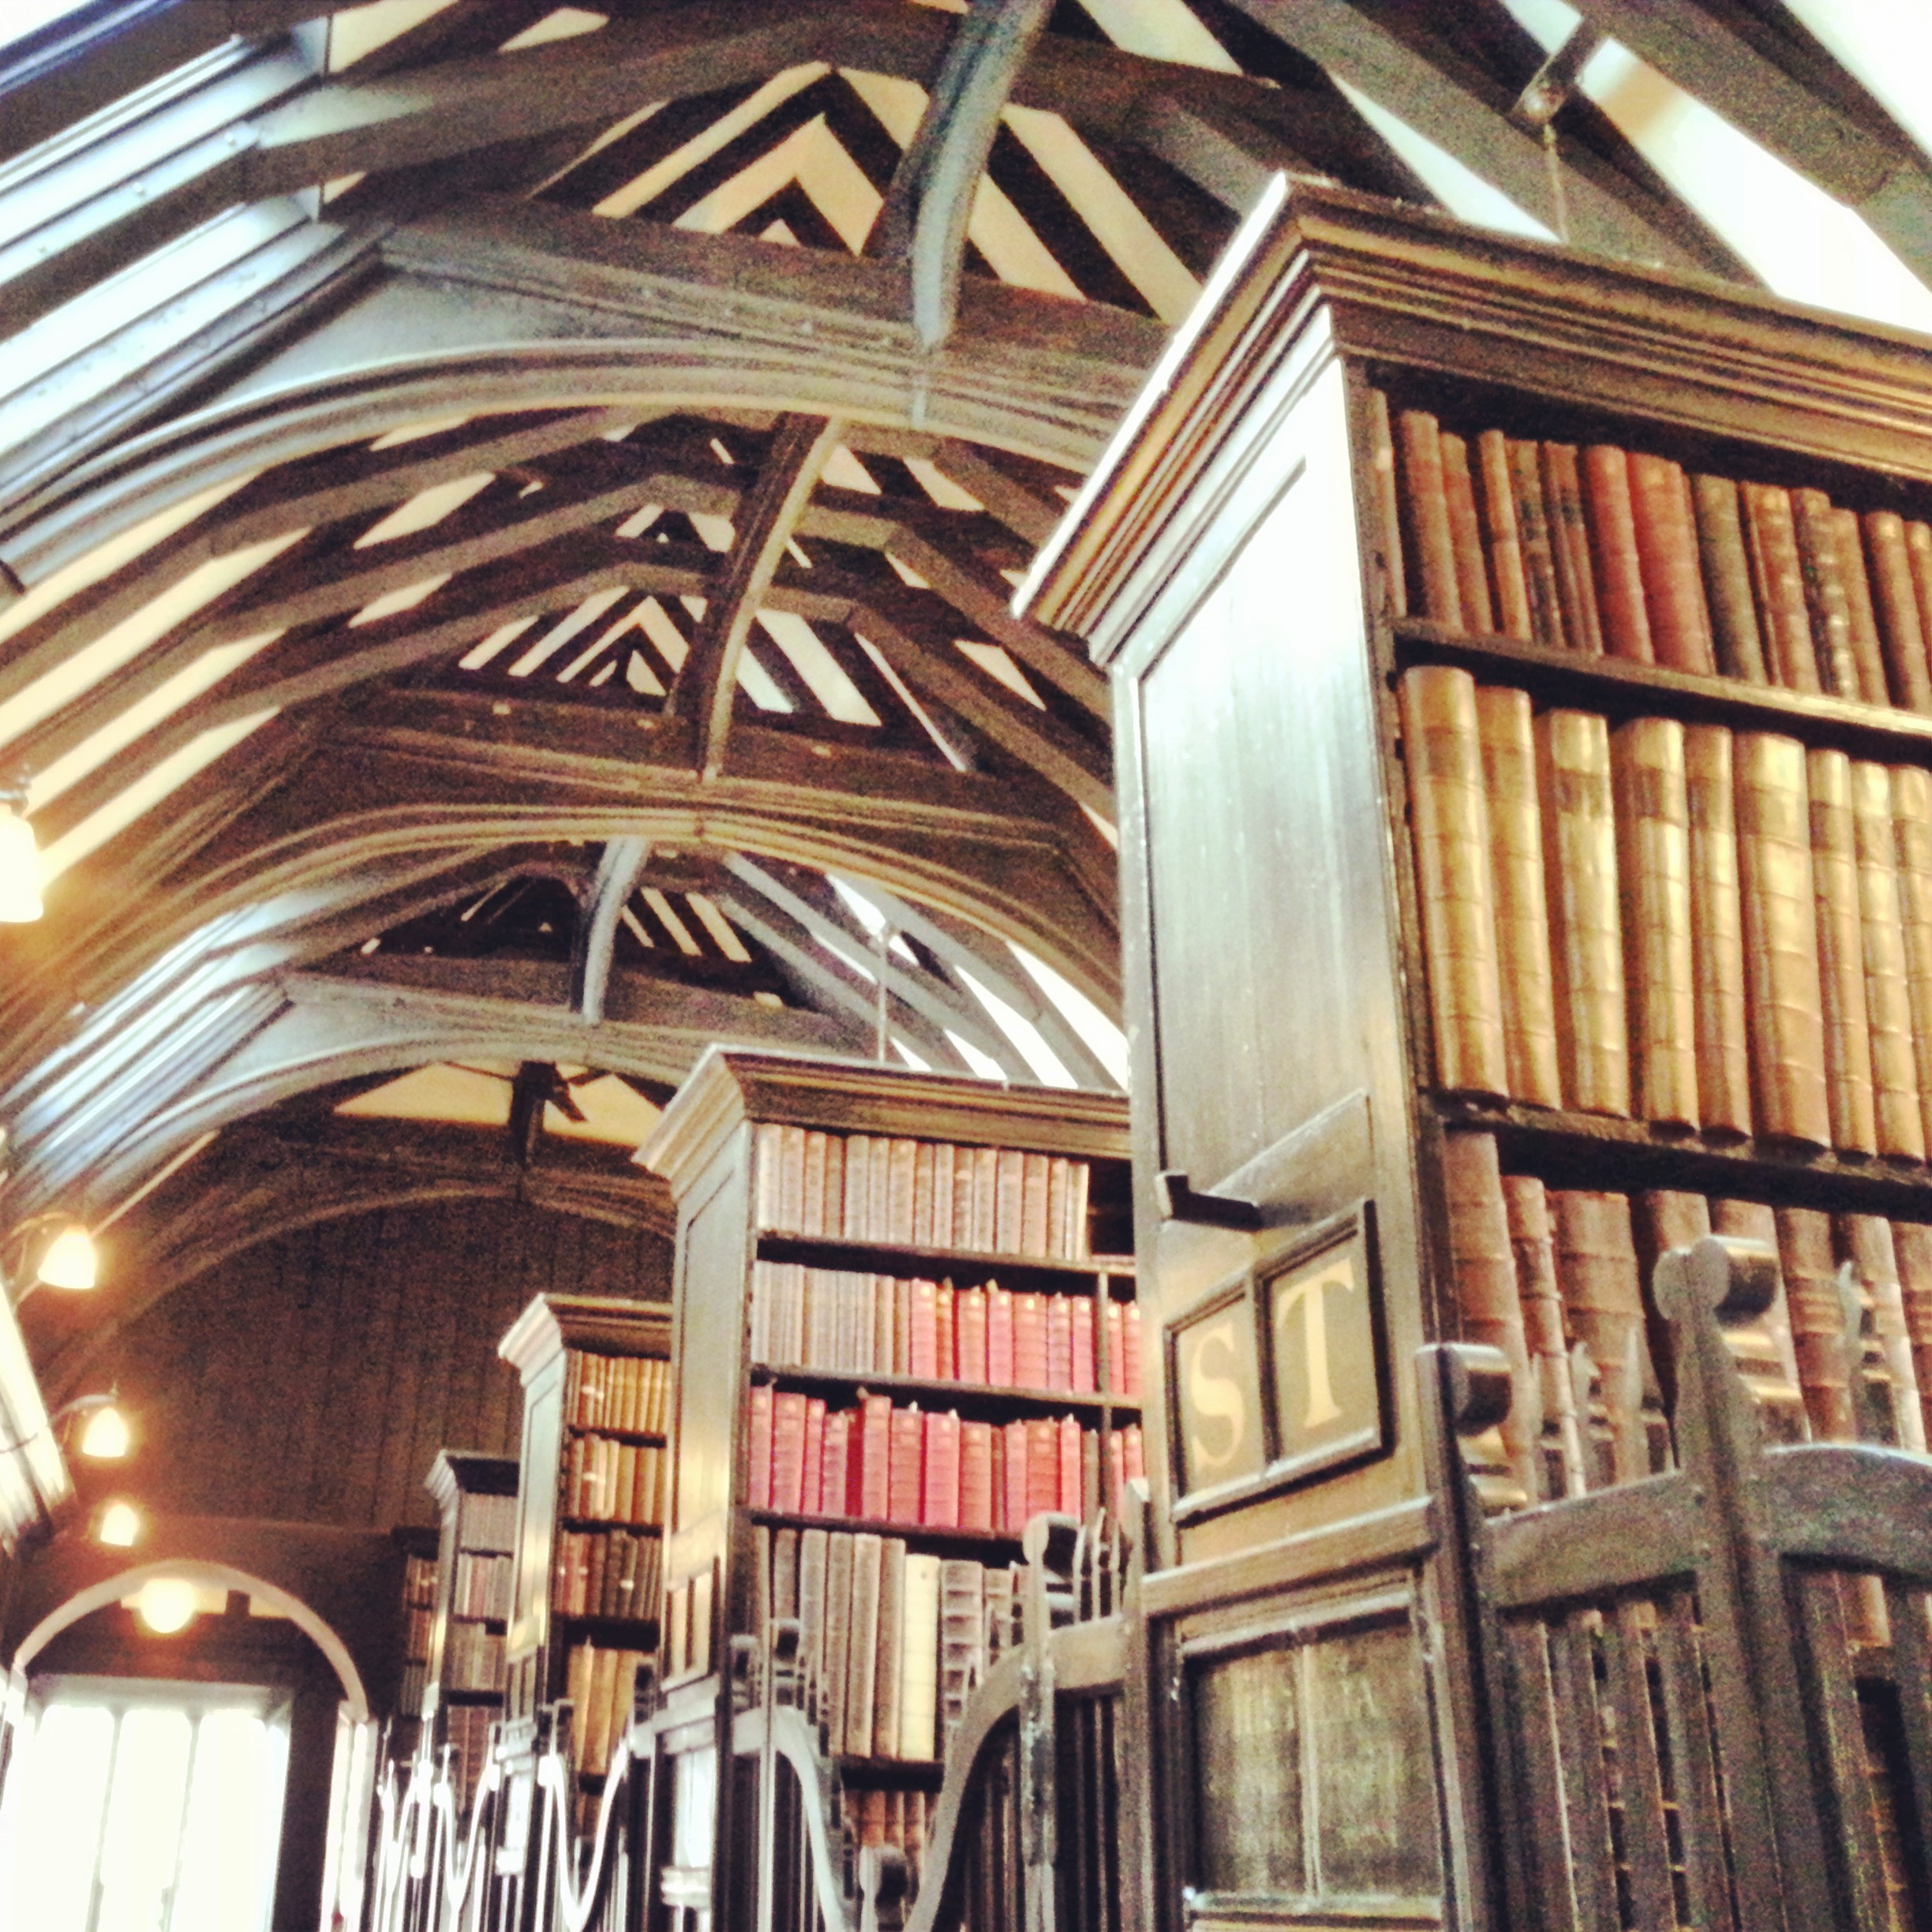 Chetham's Library